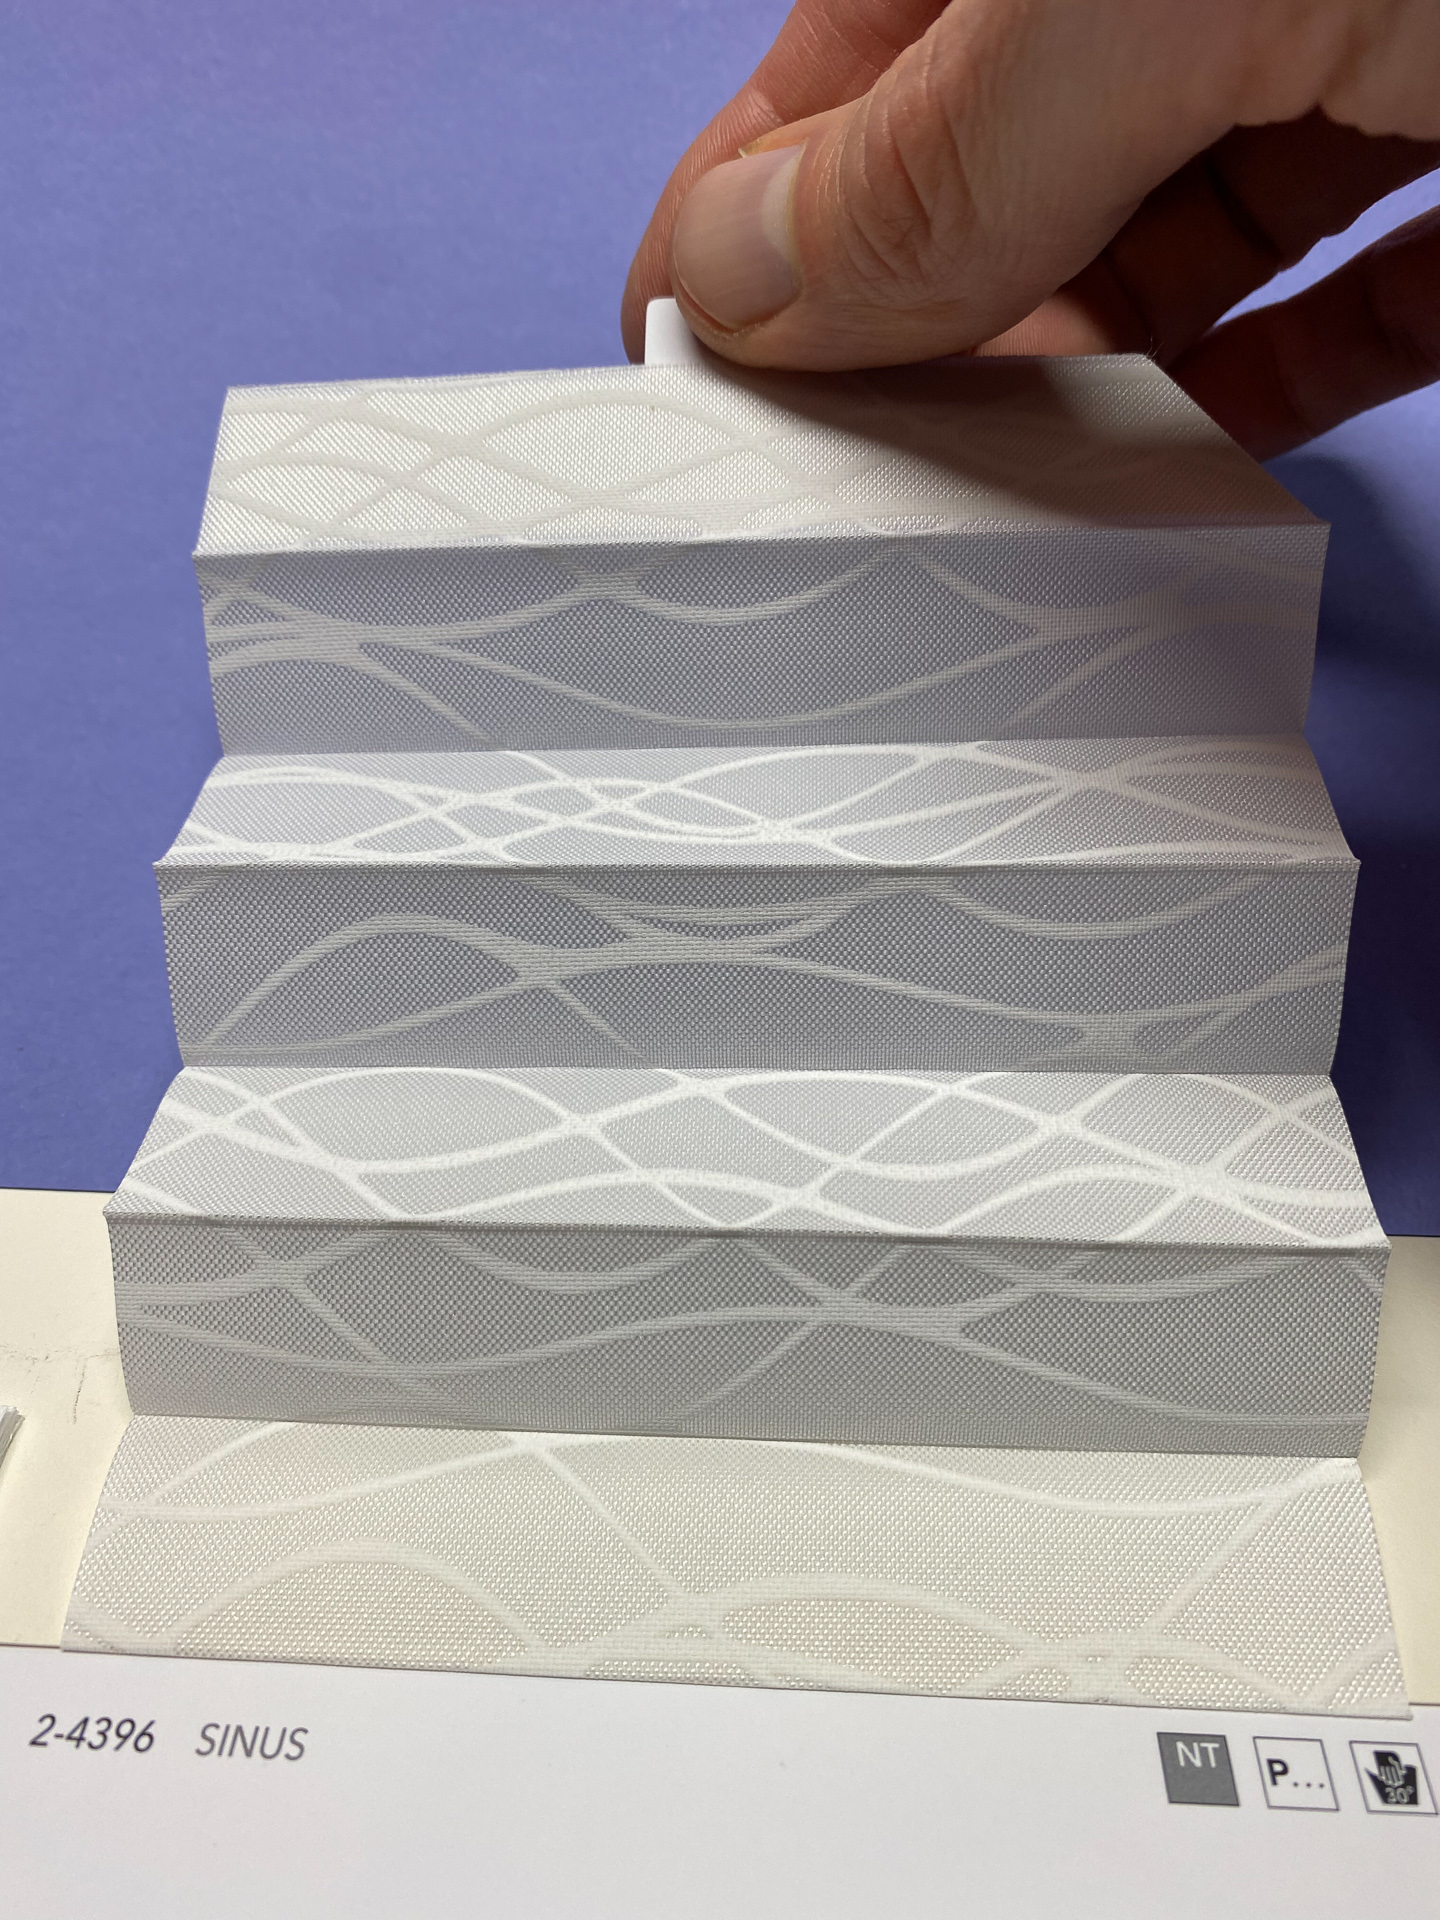 MHZ Plissee Stoff Muster aus der Farbkarte "5 white classics" | Material: 100 % PES